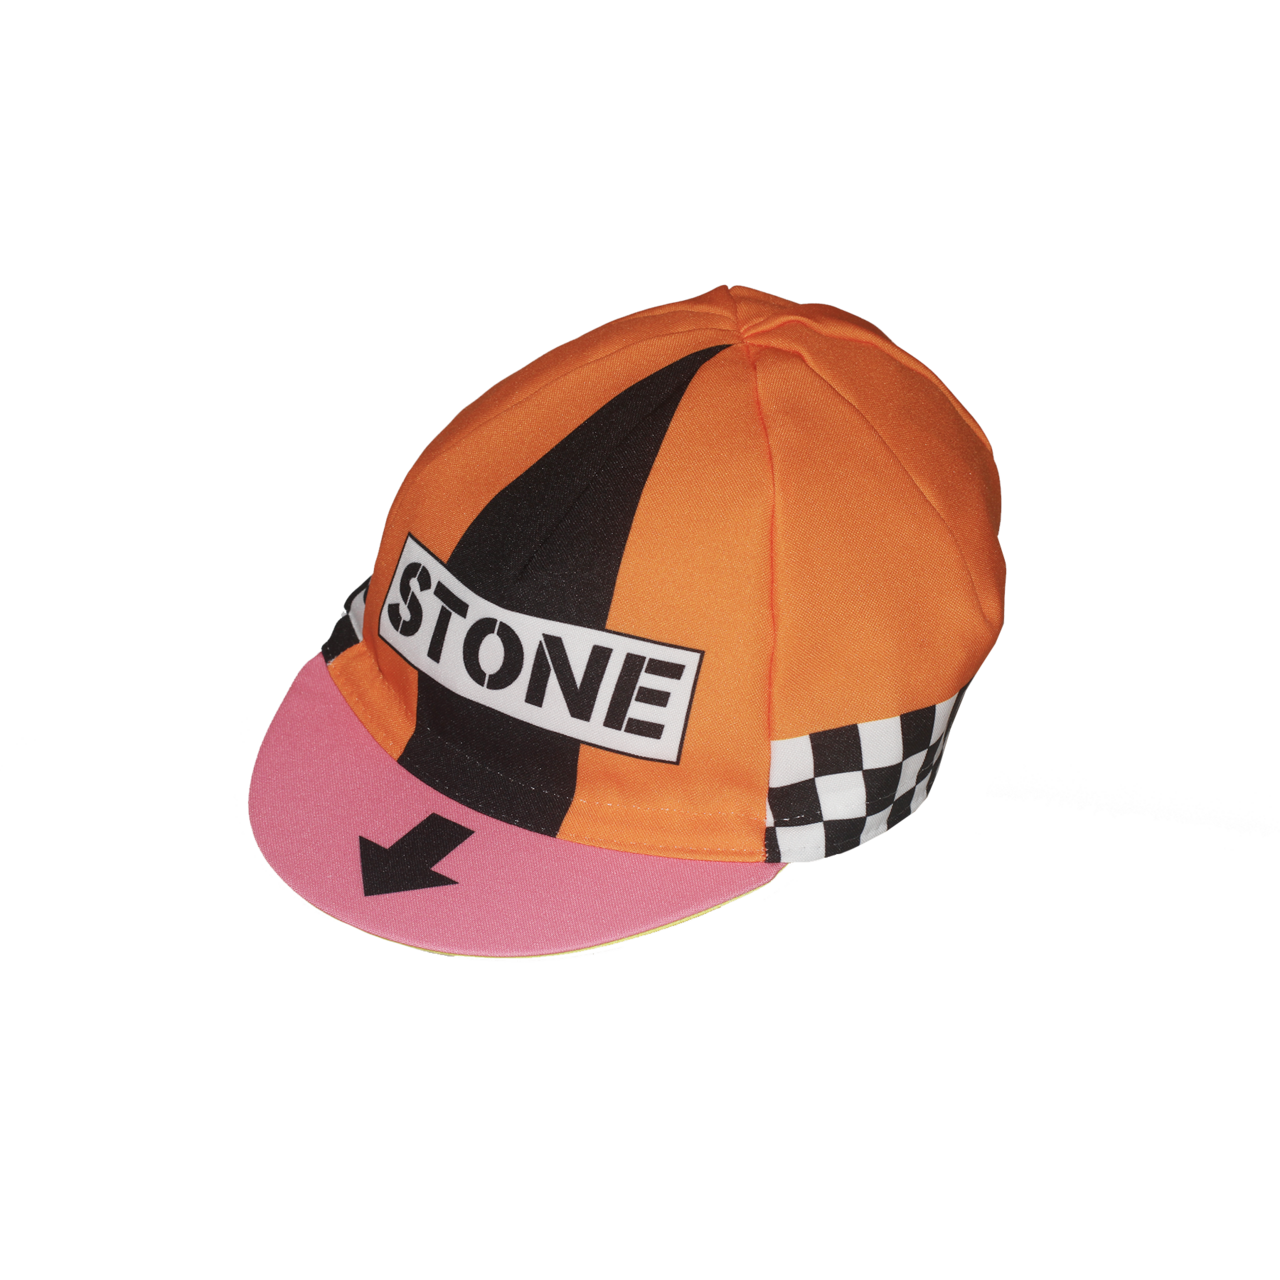 STONE - Cycling Cap